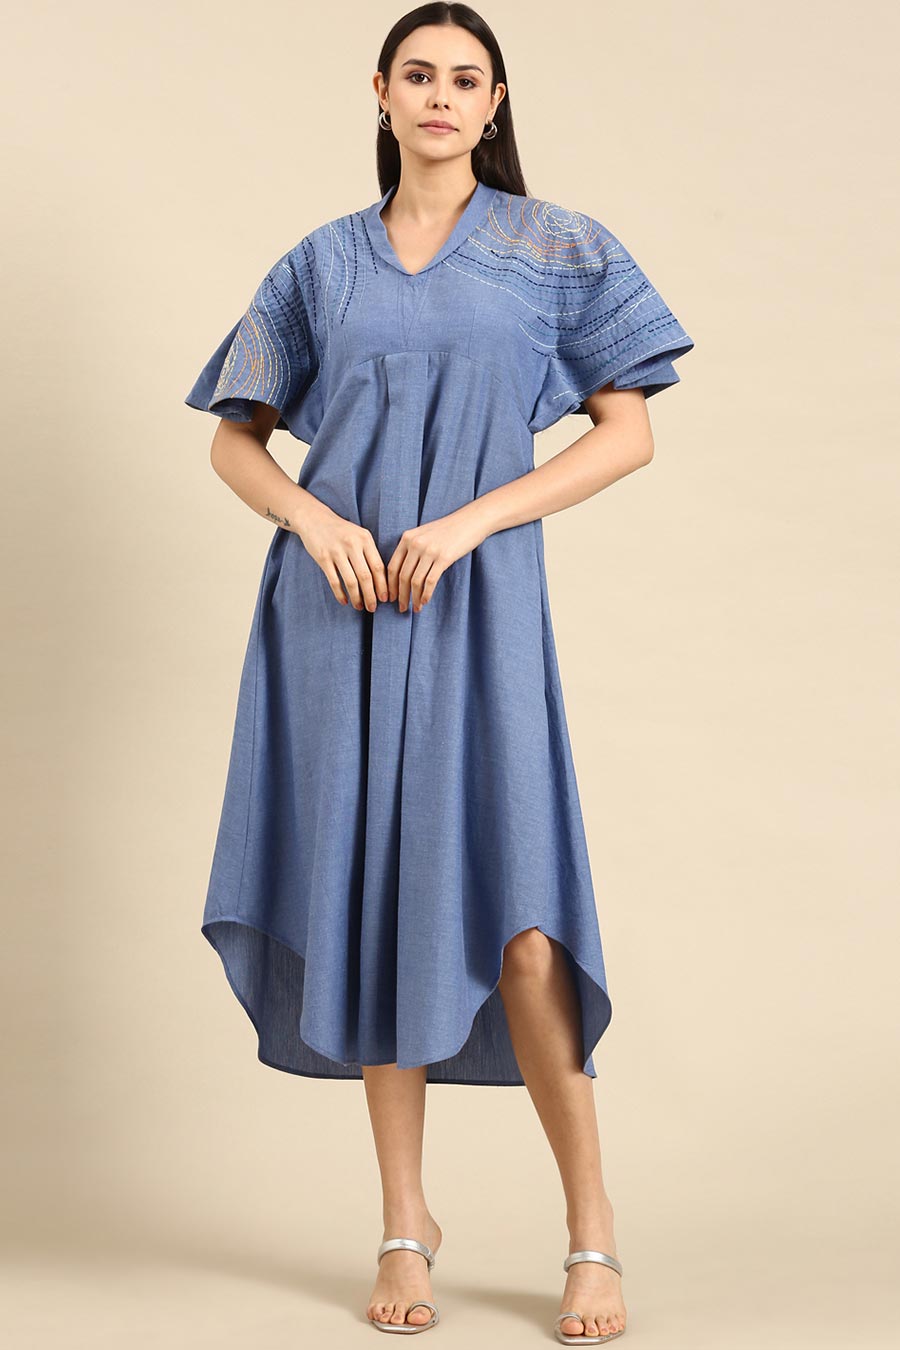 Denim Blue Cotton Embroidered Dress